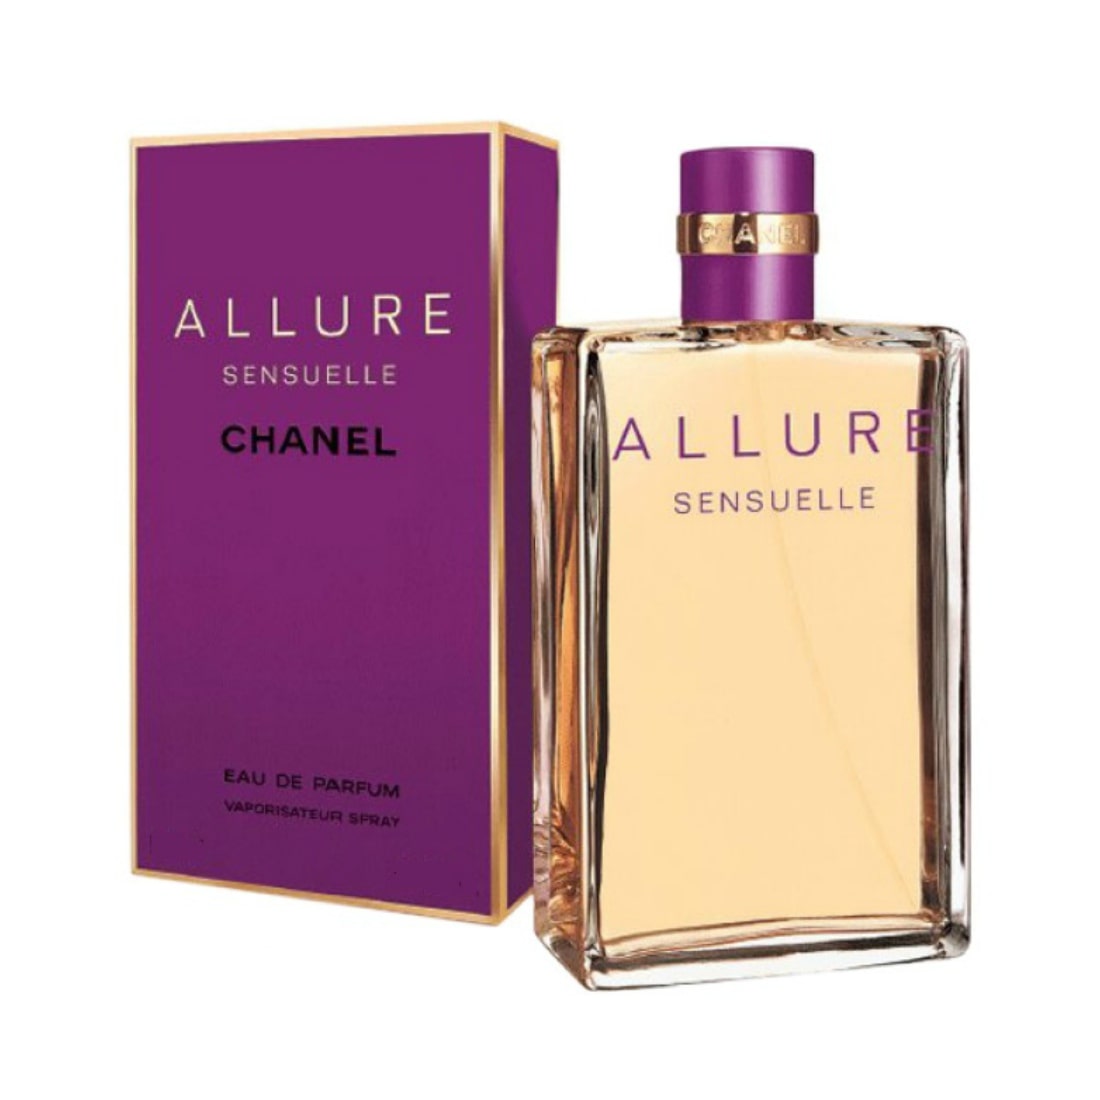 ALLURE SENSUELLE EDP Perfume Spray for Women by Chanel